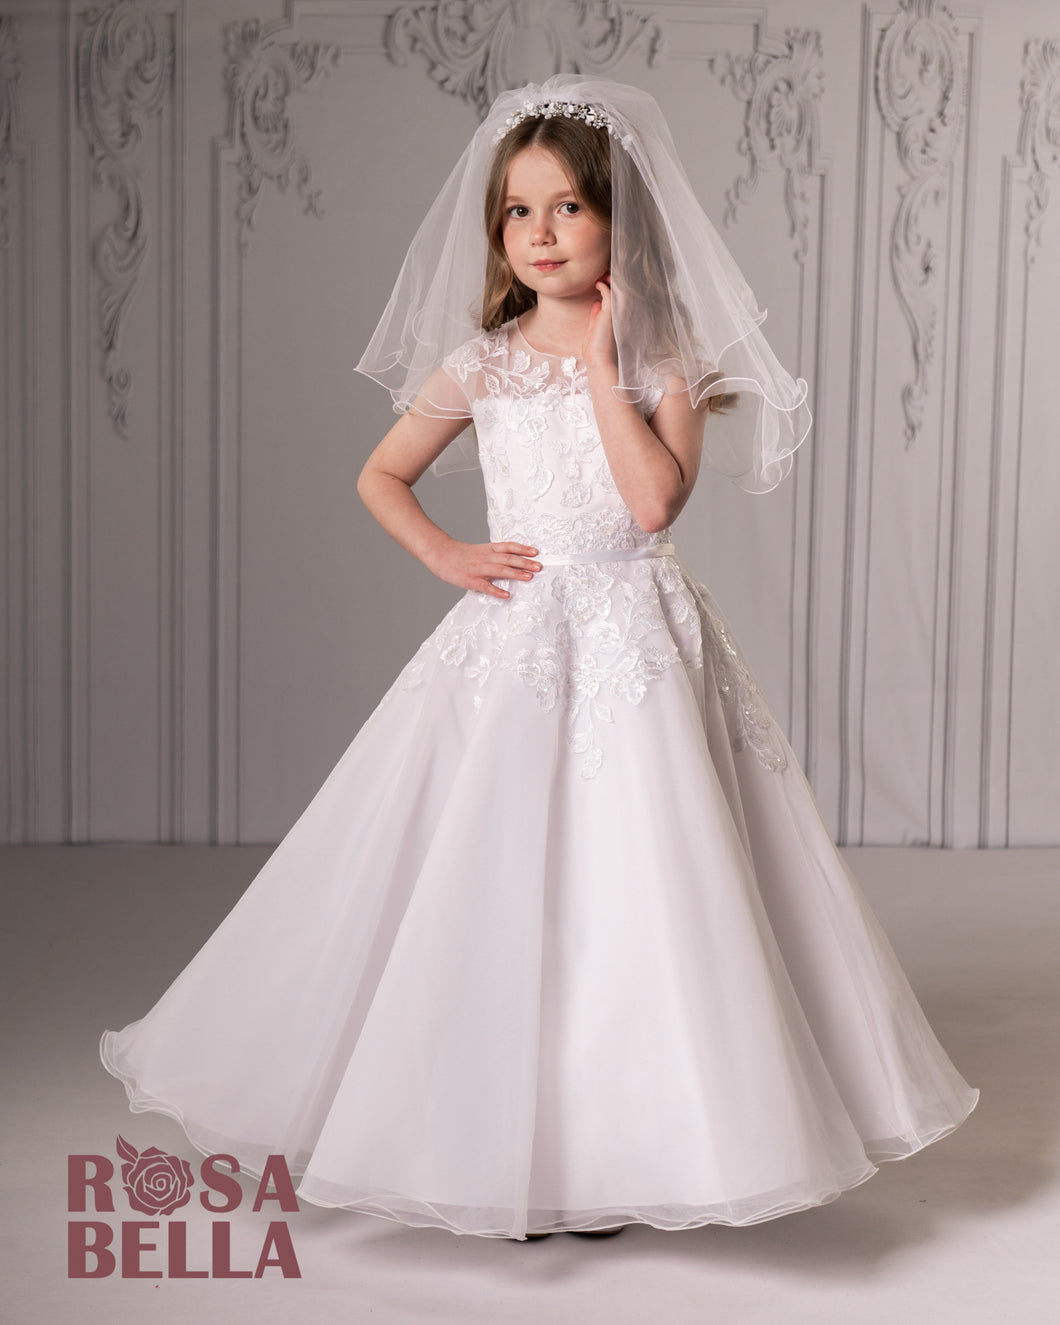 Rosa Bella By Sweetie Pie Girls White Communion Dress:- RB301